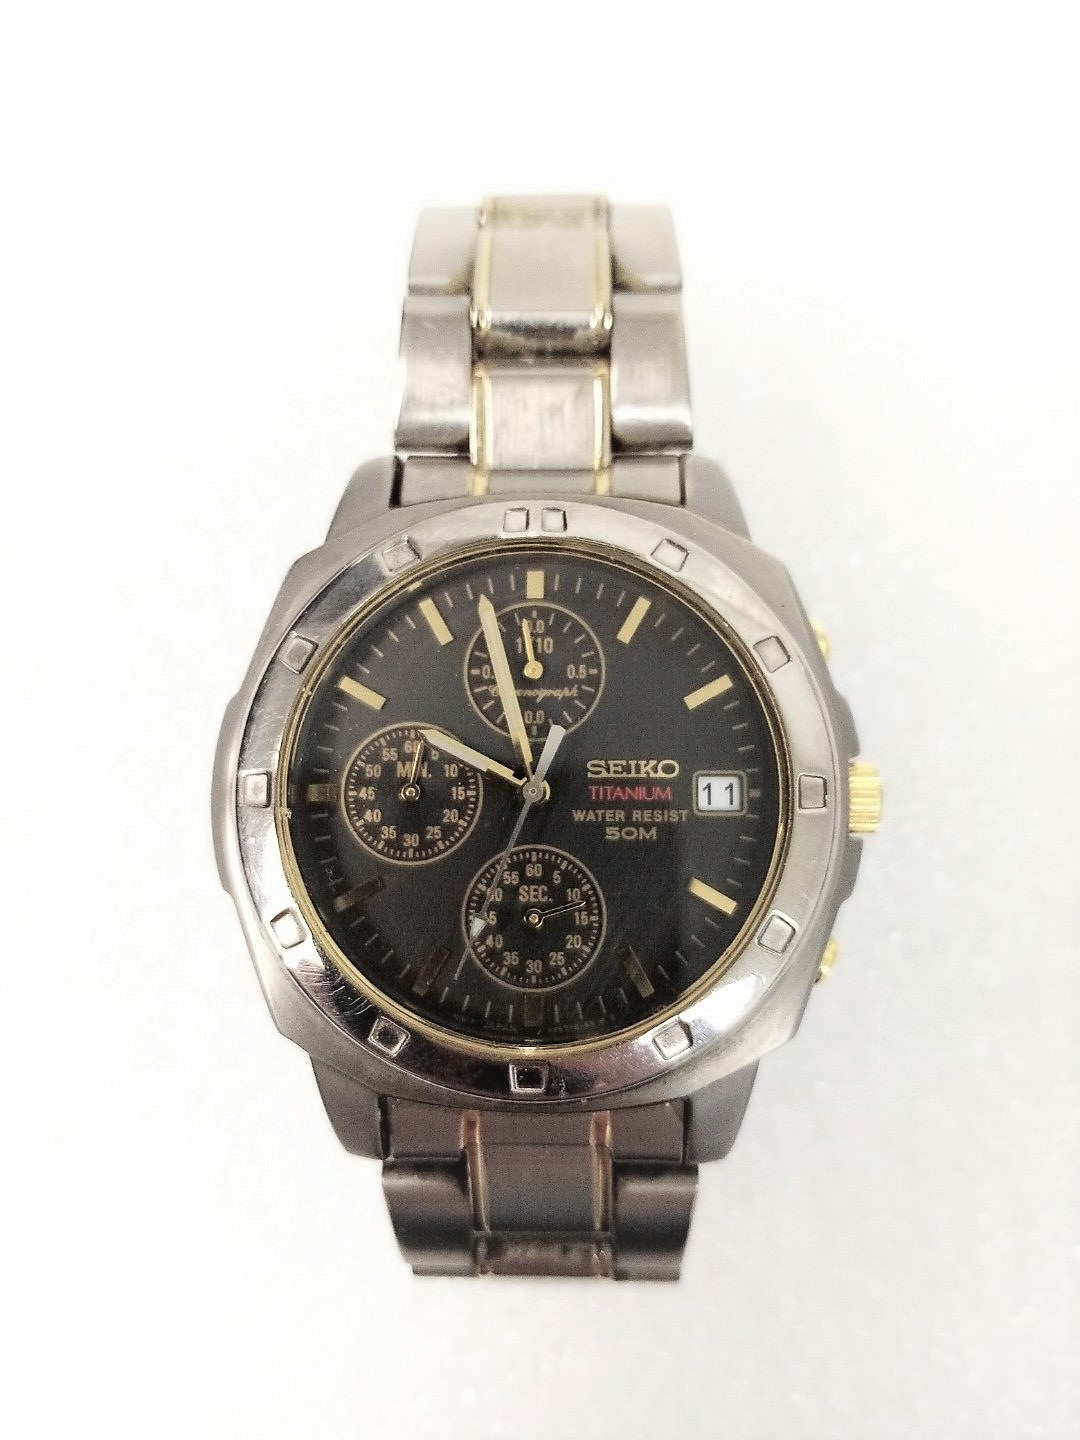 Seiko Titanium Quartz Wristwatch Seiko Titanium Quartz movement water-resistant 50m Wristwatch.